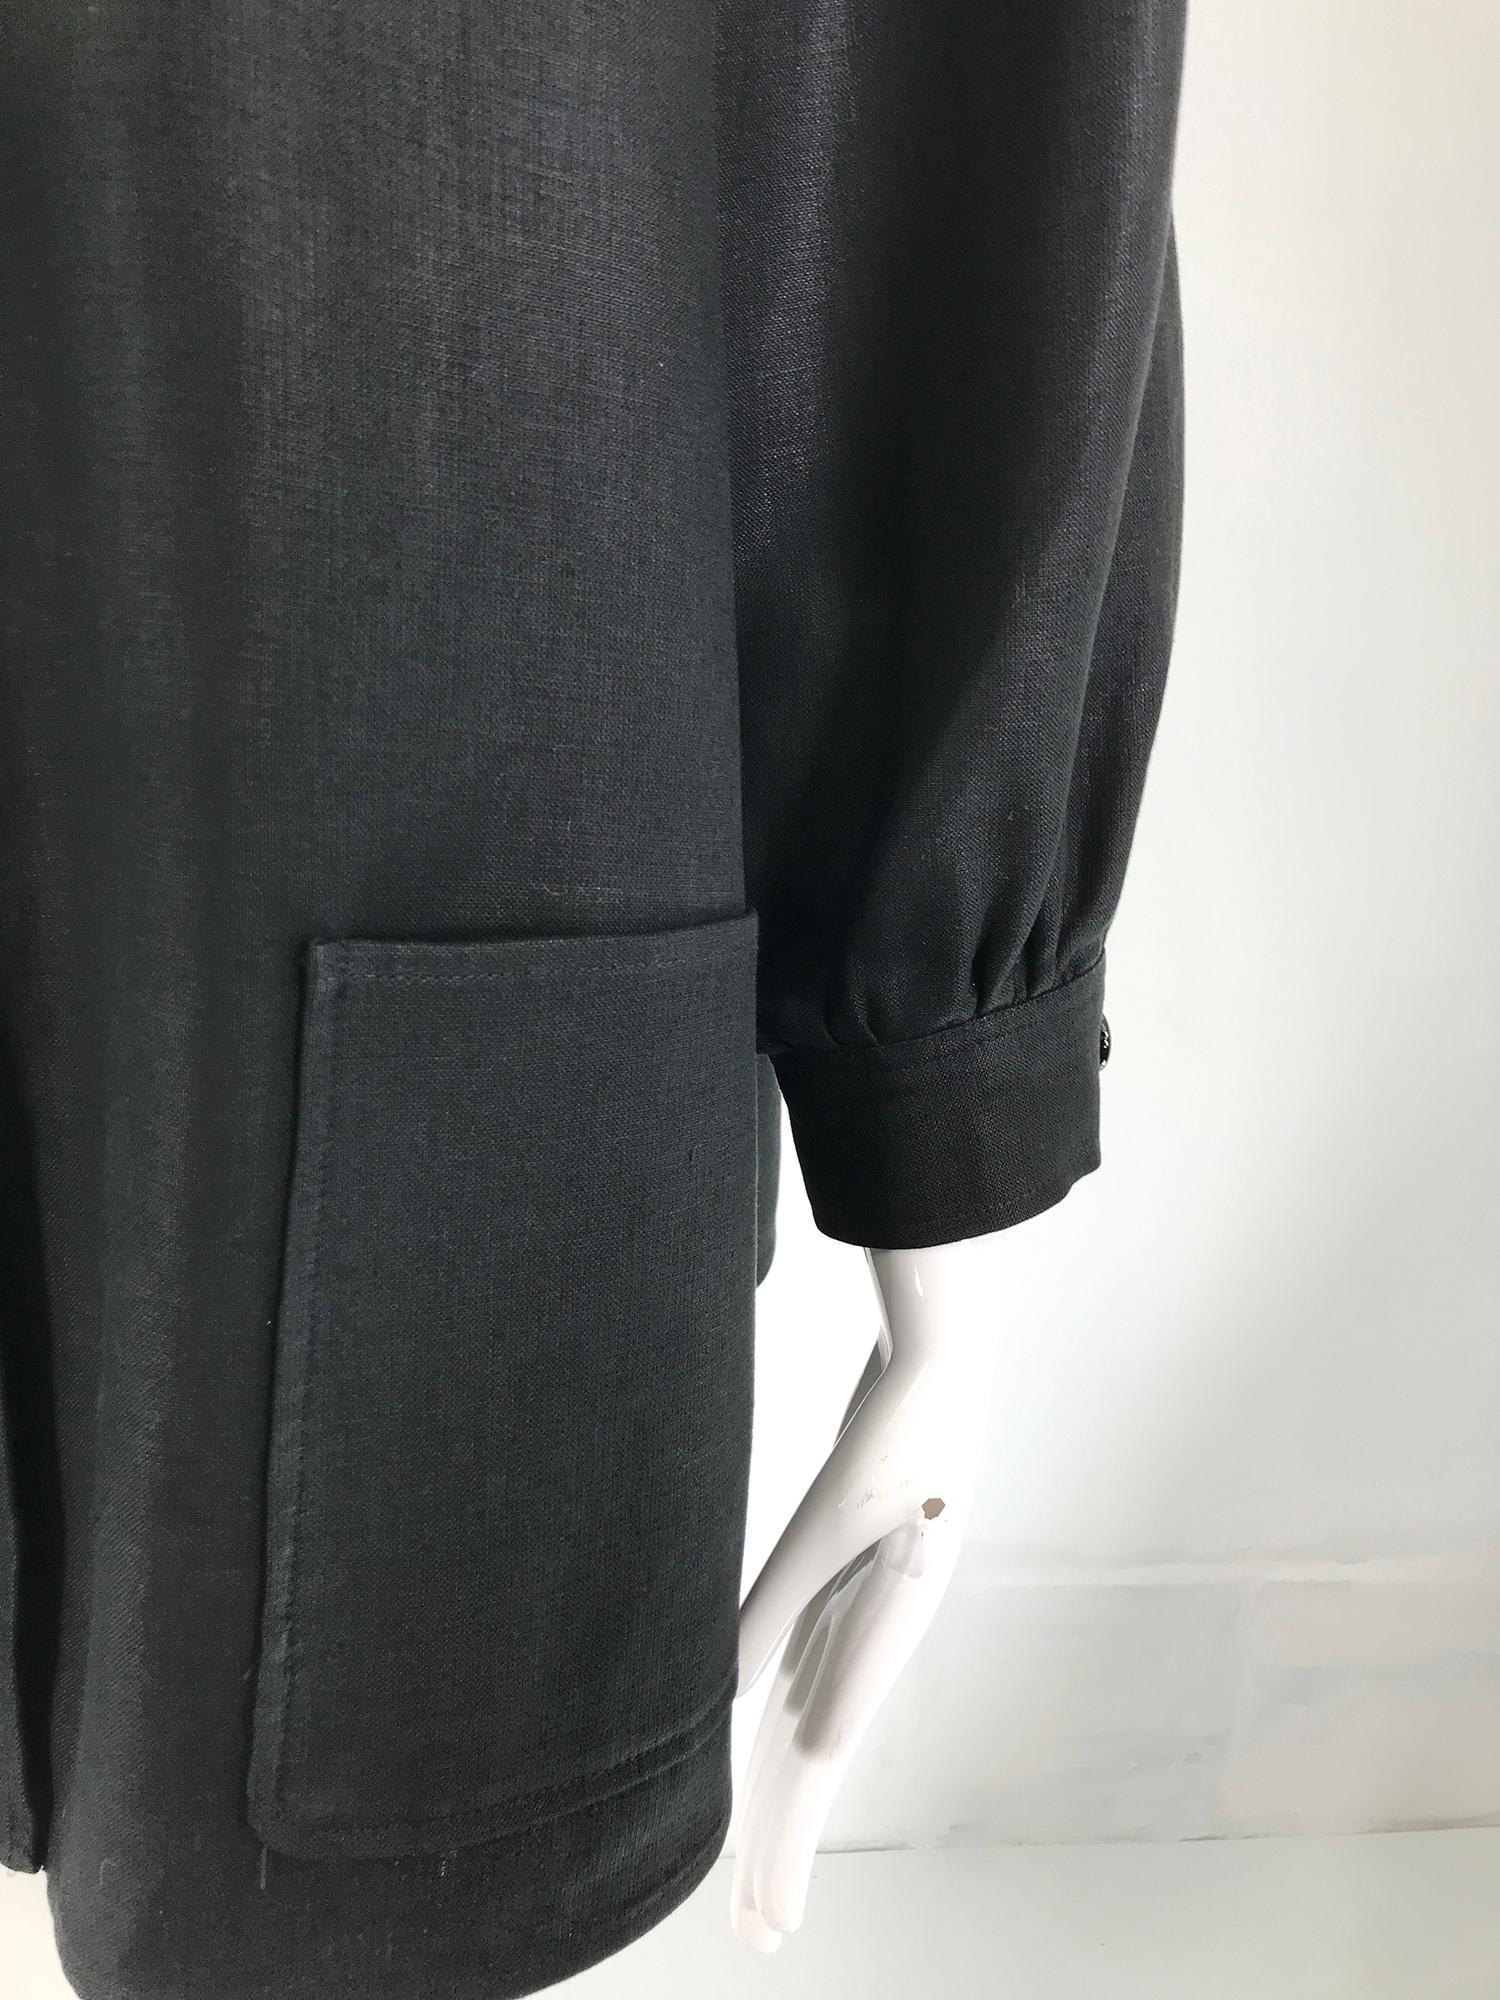 Oscar de la Renta Black Linen Button Front Full Sleeve Hip Pocket Jacket 1980s For Sale 12